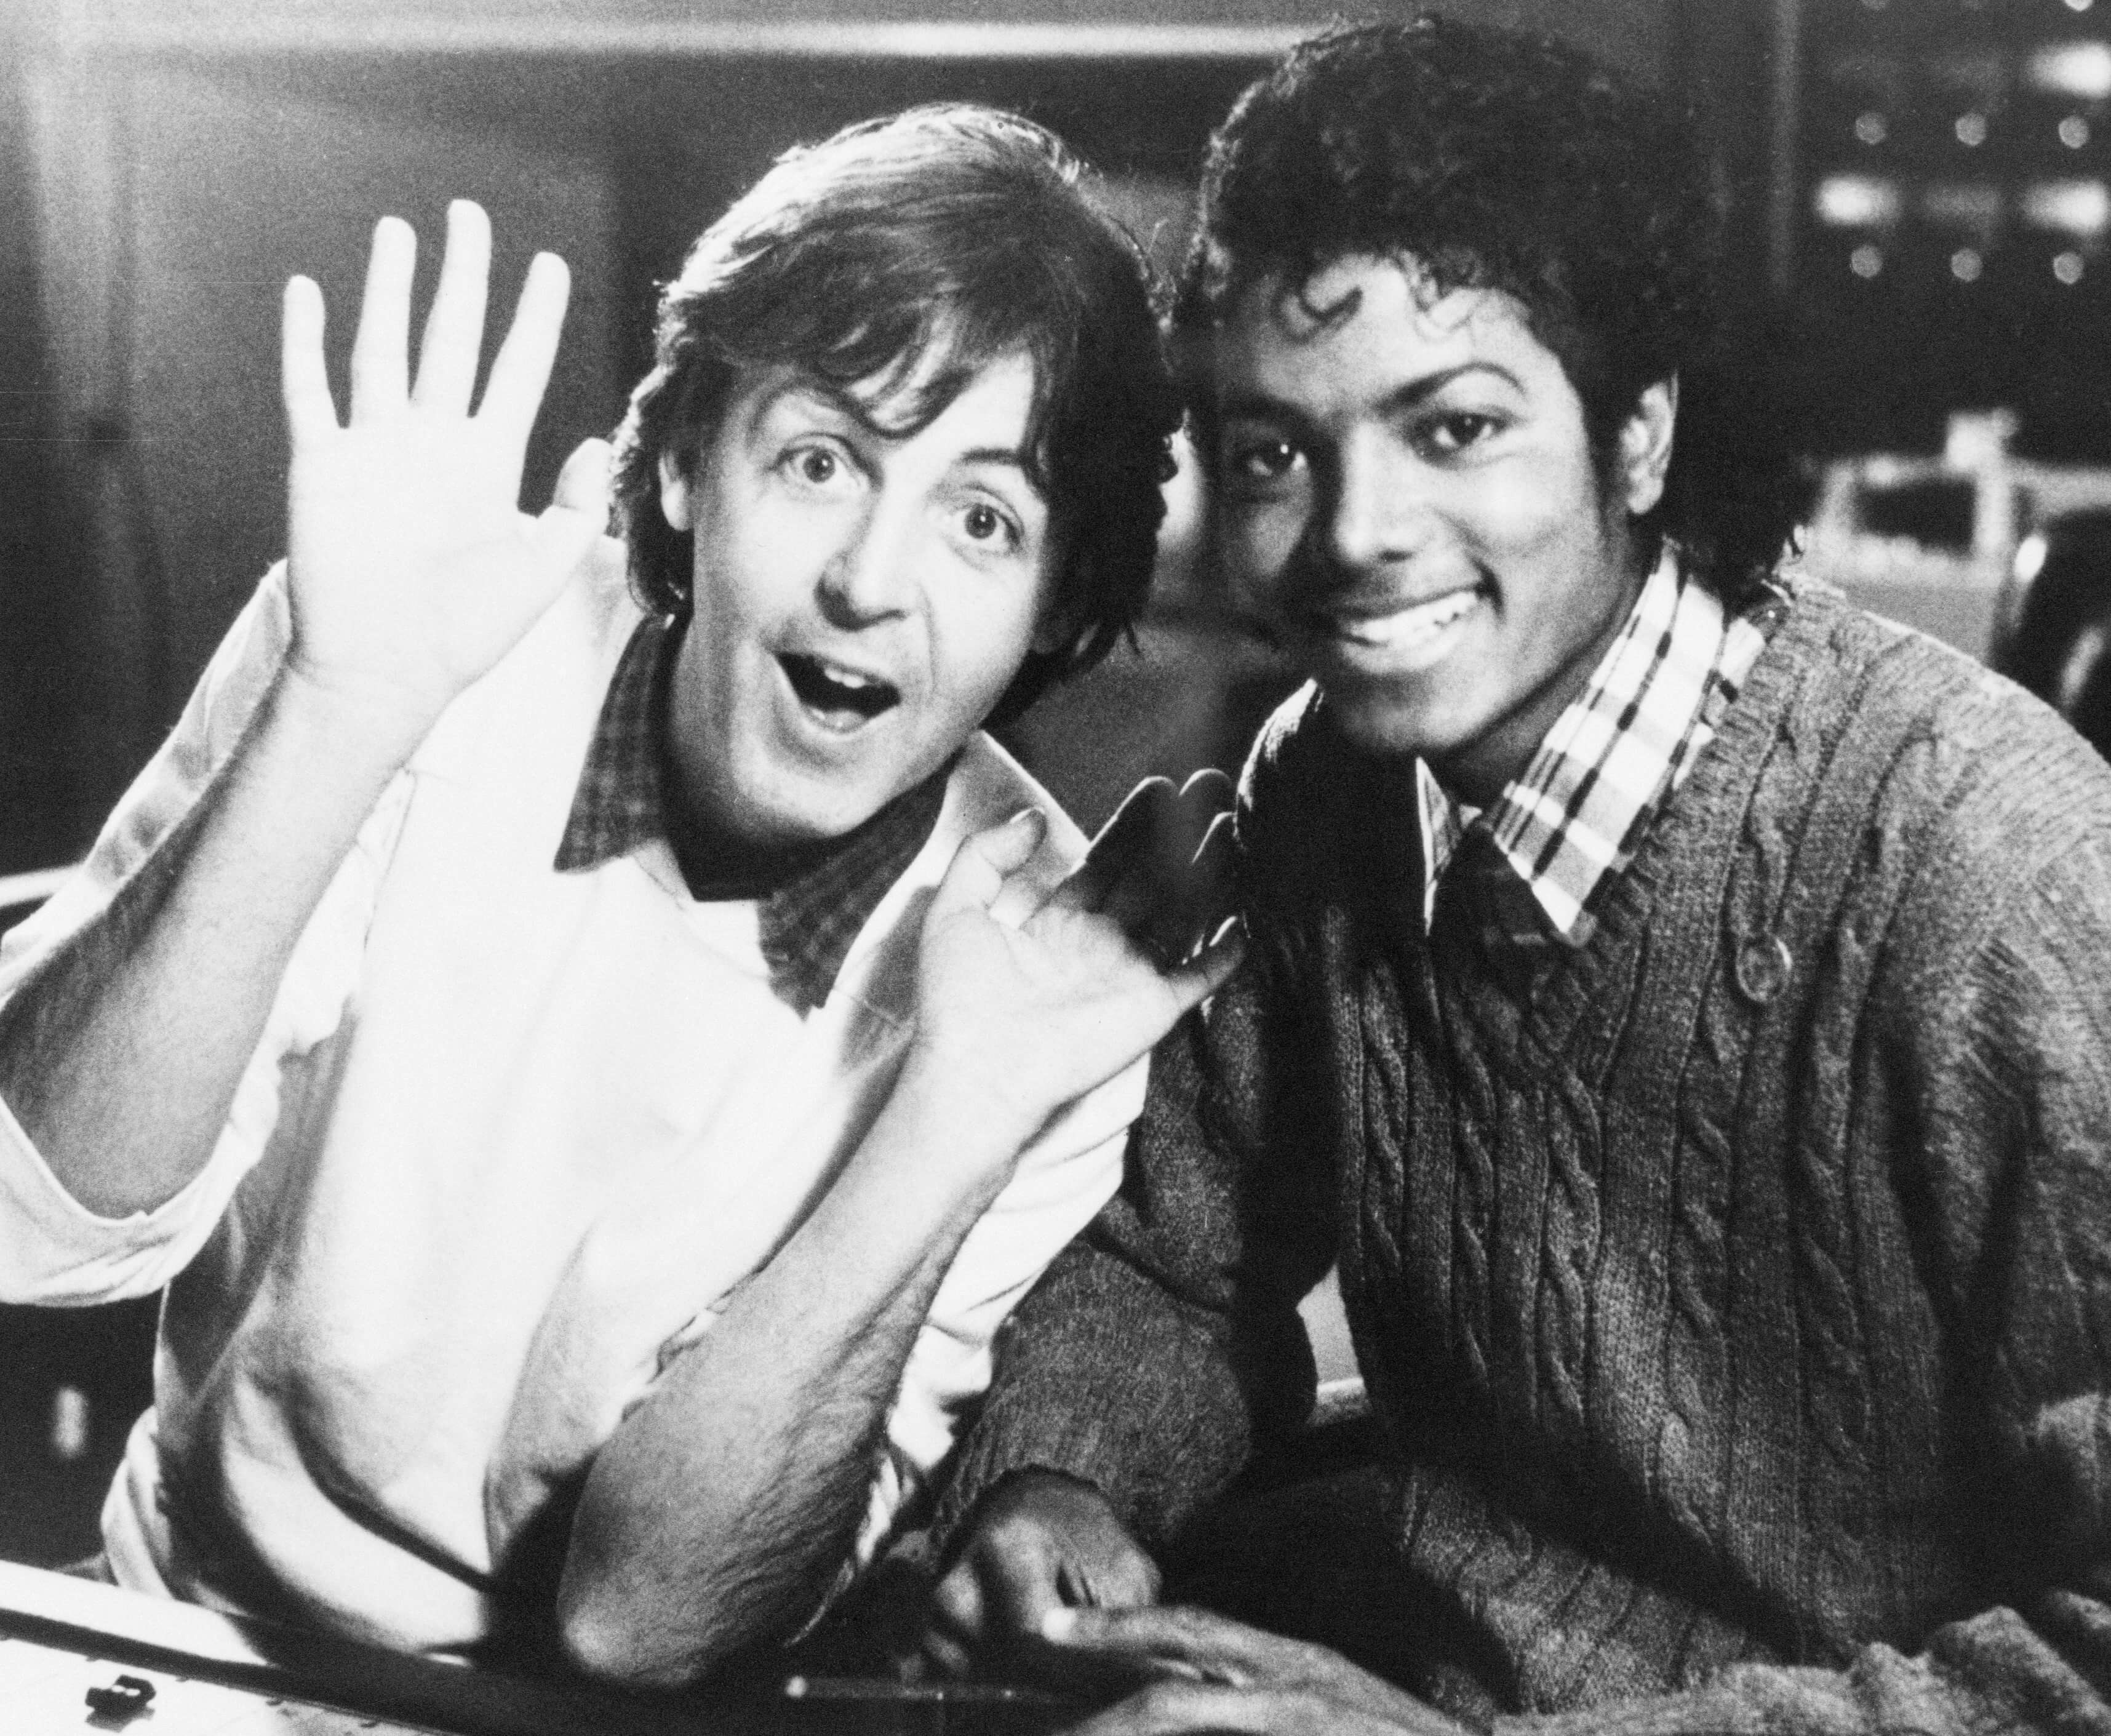 "The Girl Is Mine" singers Paul McCartney and Michael Jackson